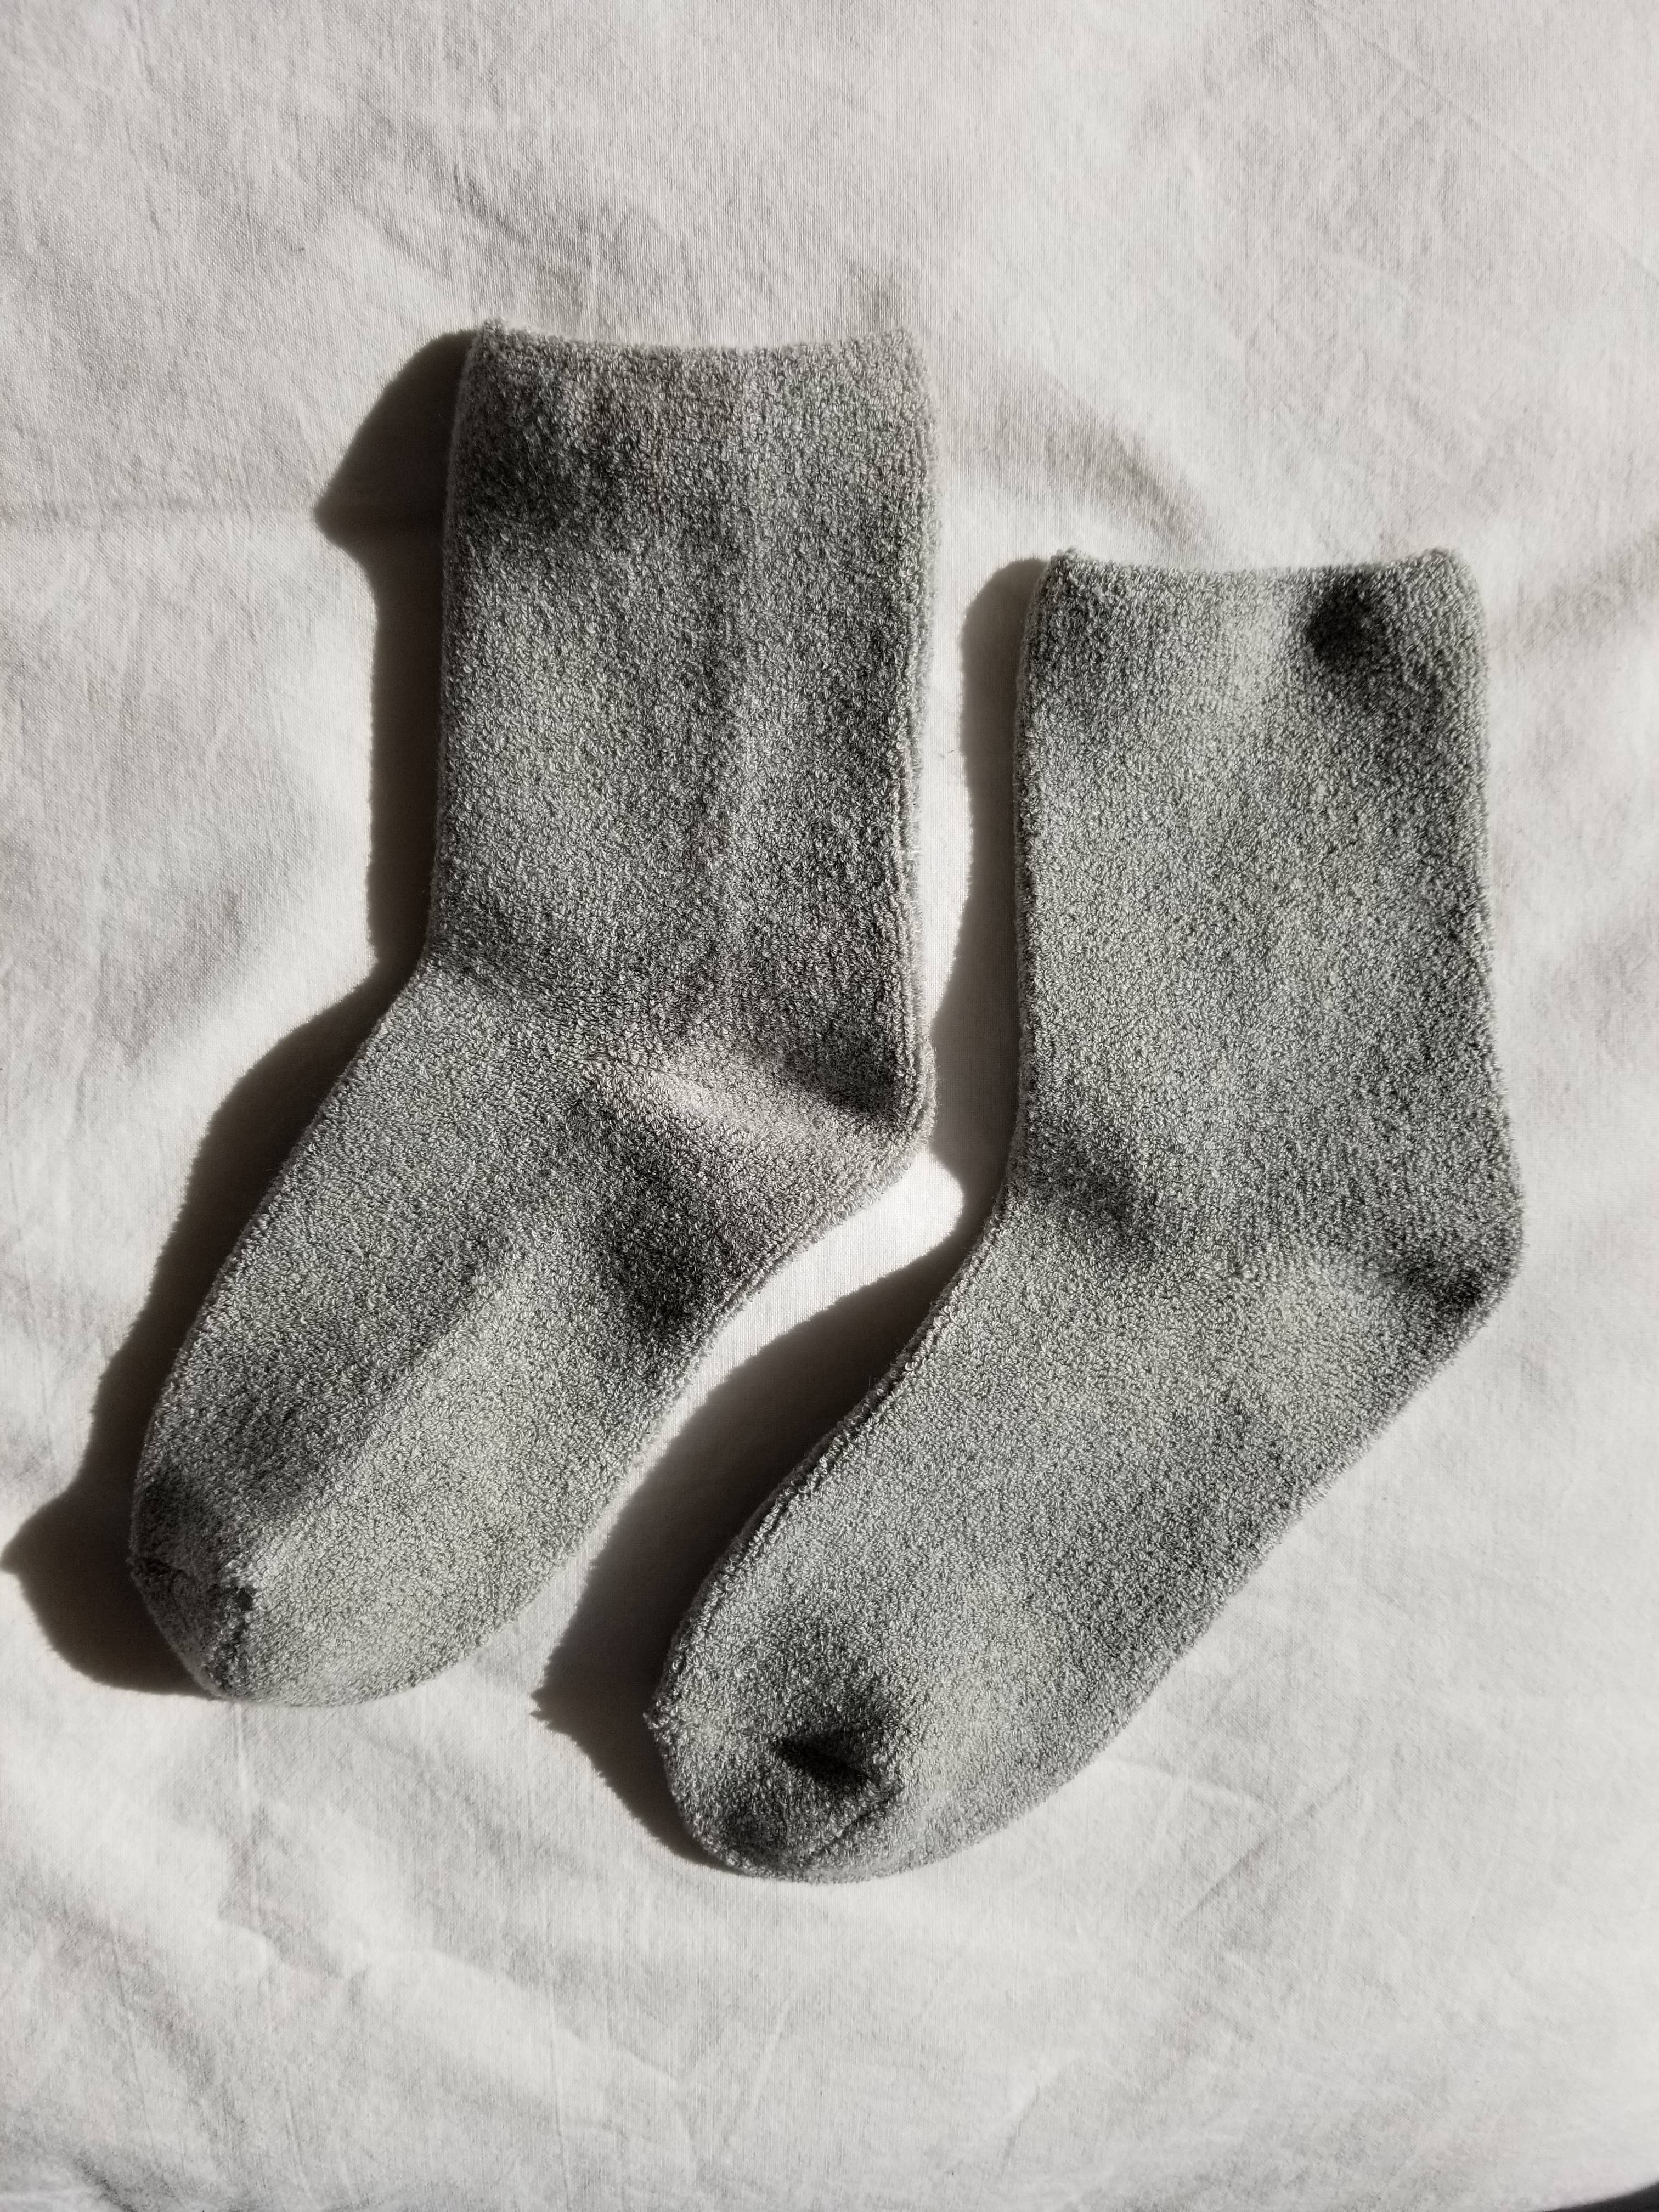 Cloud Socks - Proper